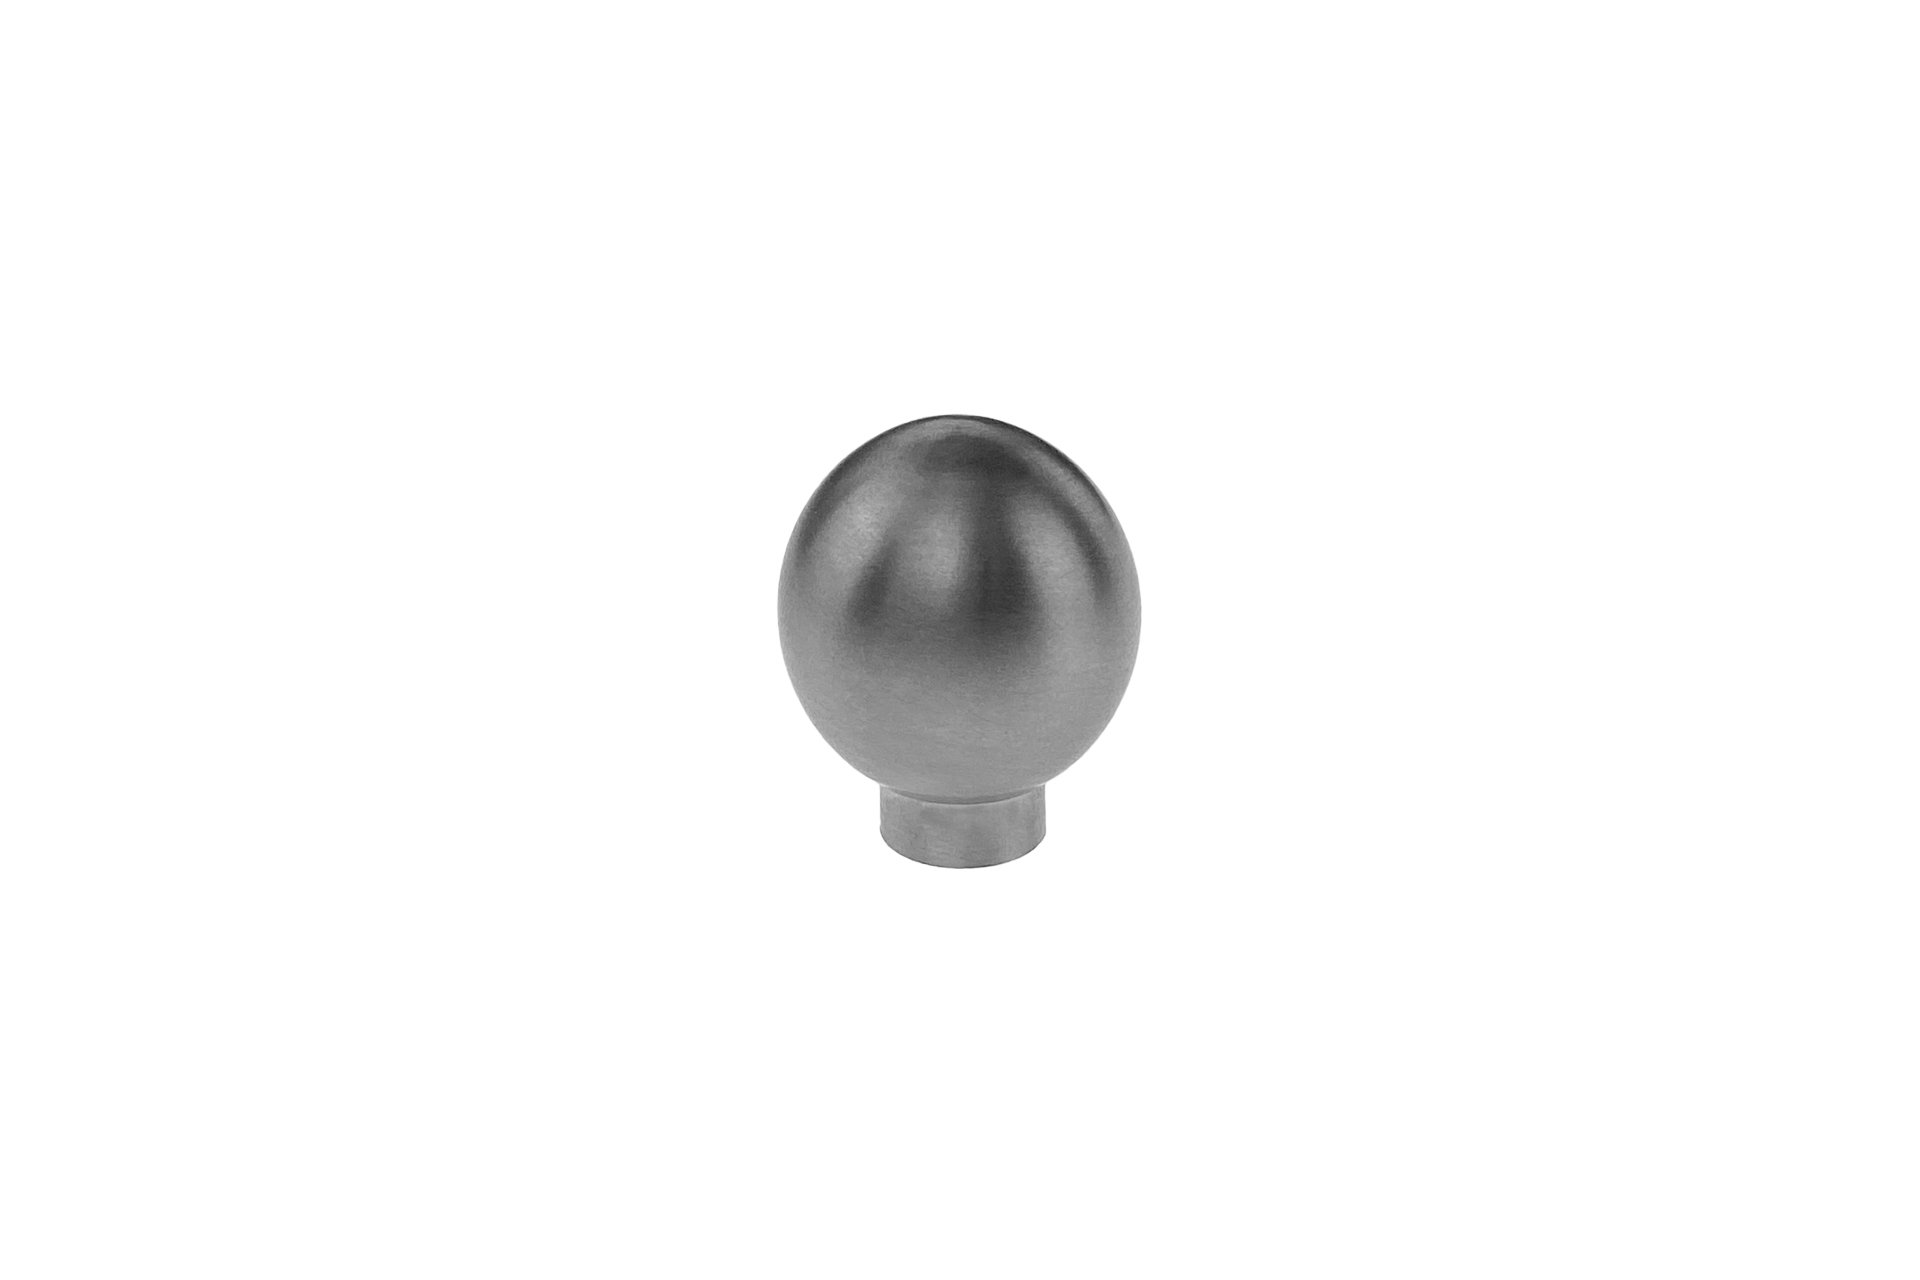 Möbelgriff / Knopf kugelförmig aus Edelstahl, Ø 25 x 29 mm